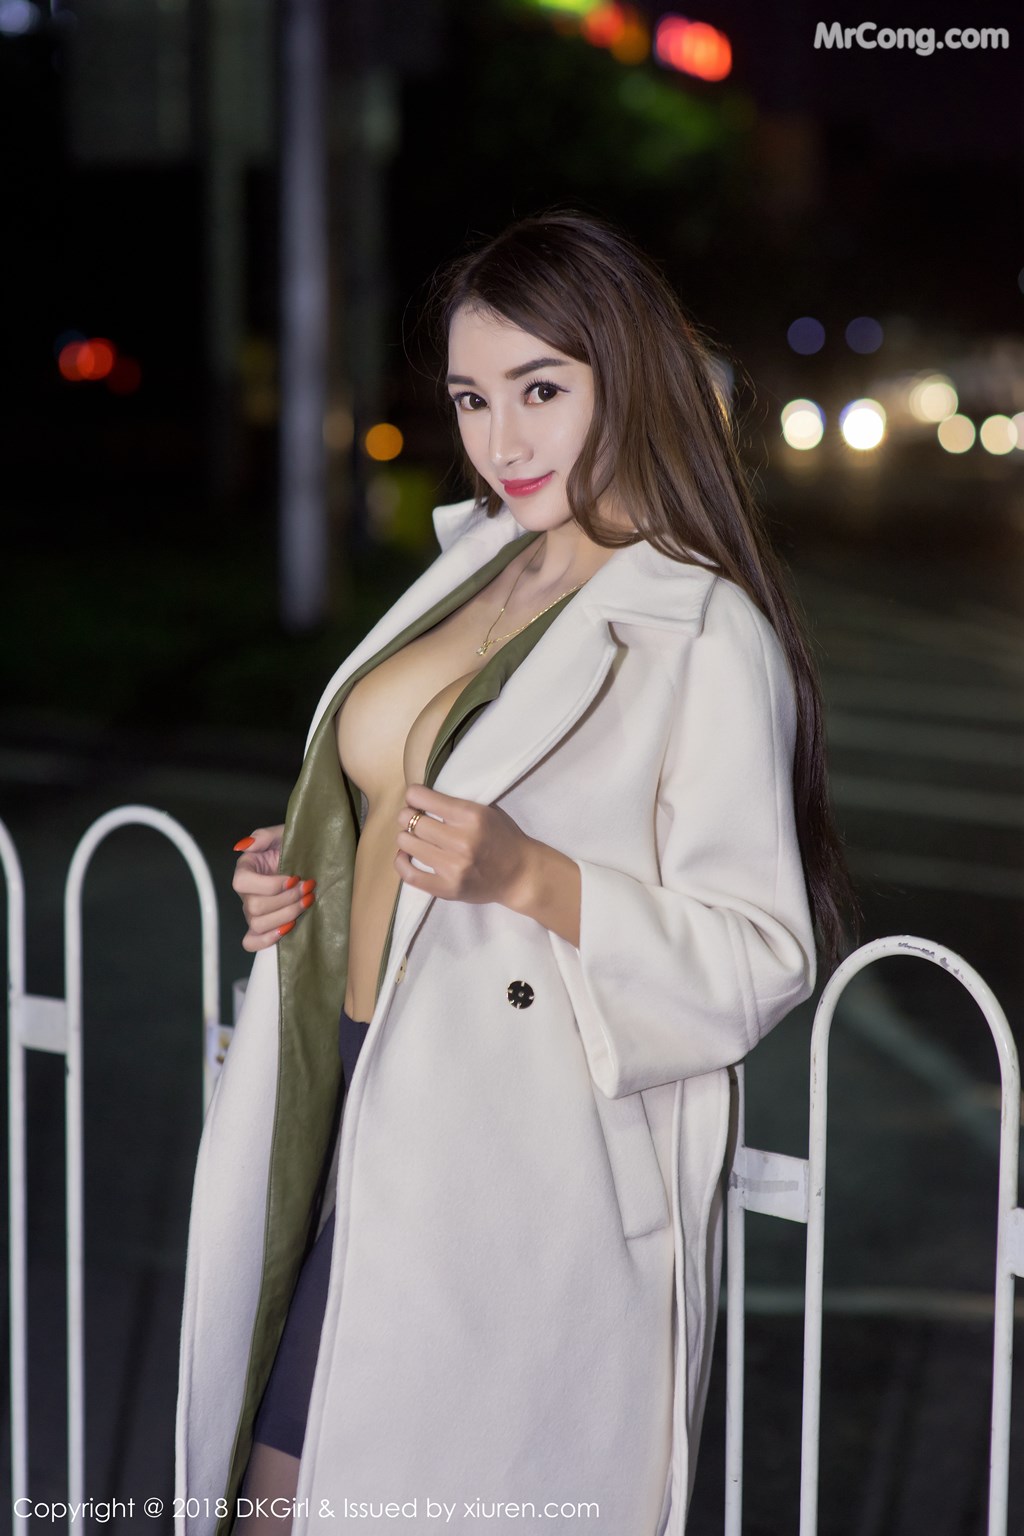 DKGirl Vol.059: Model Jessie (婕 西 儿) (50 photos)